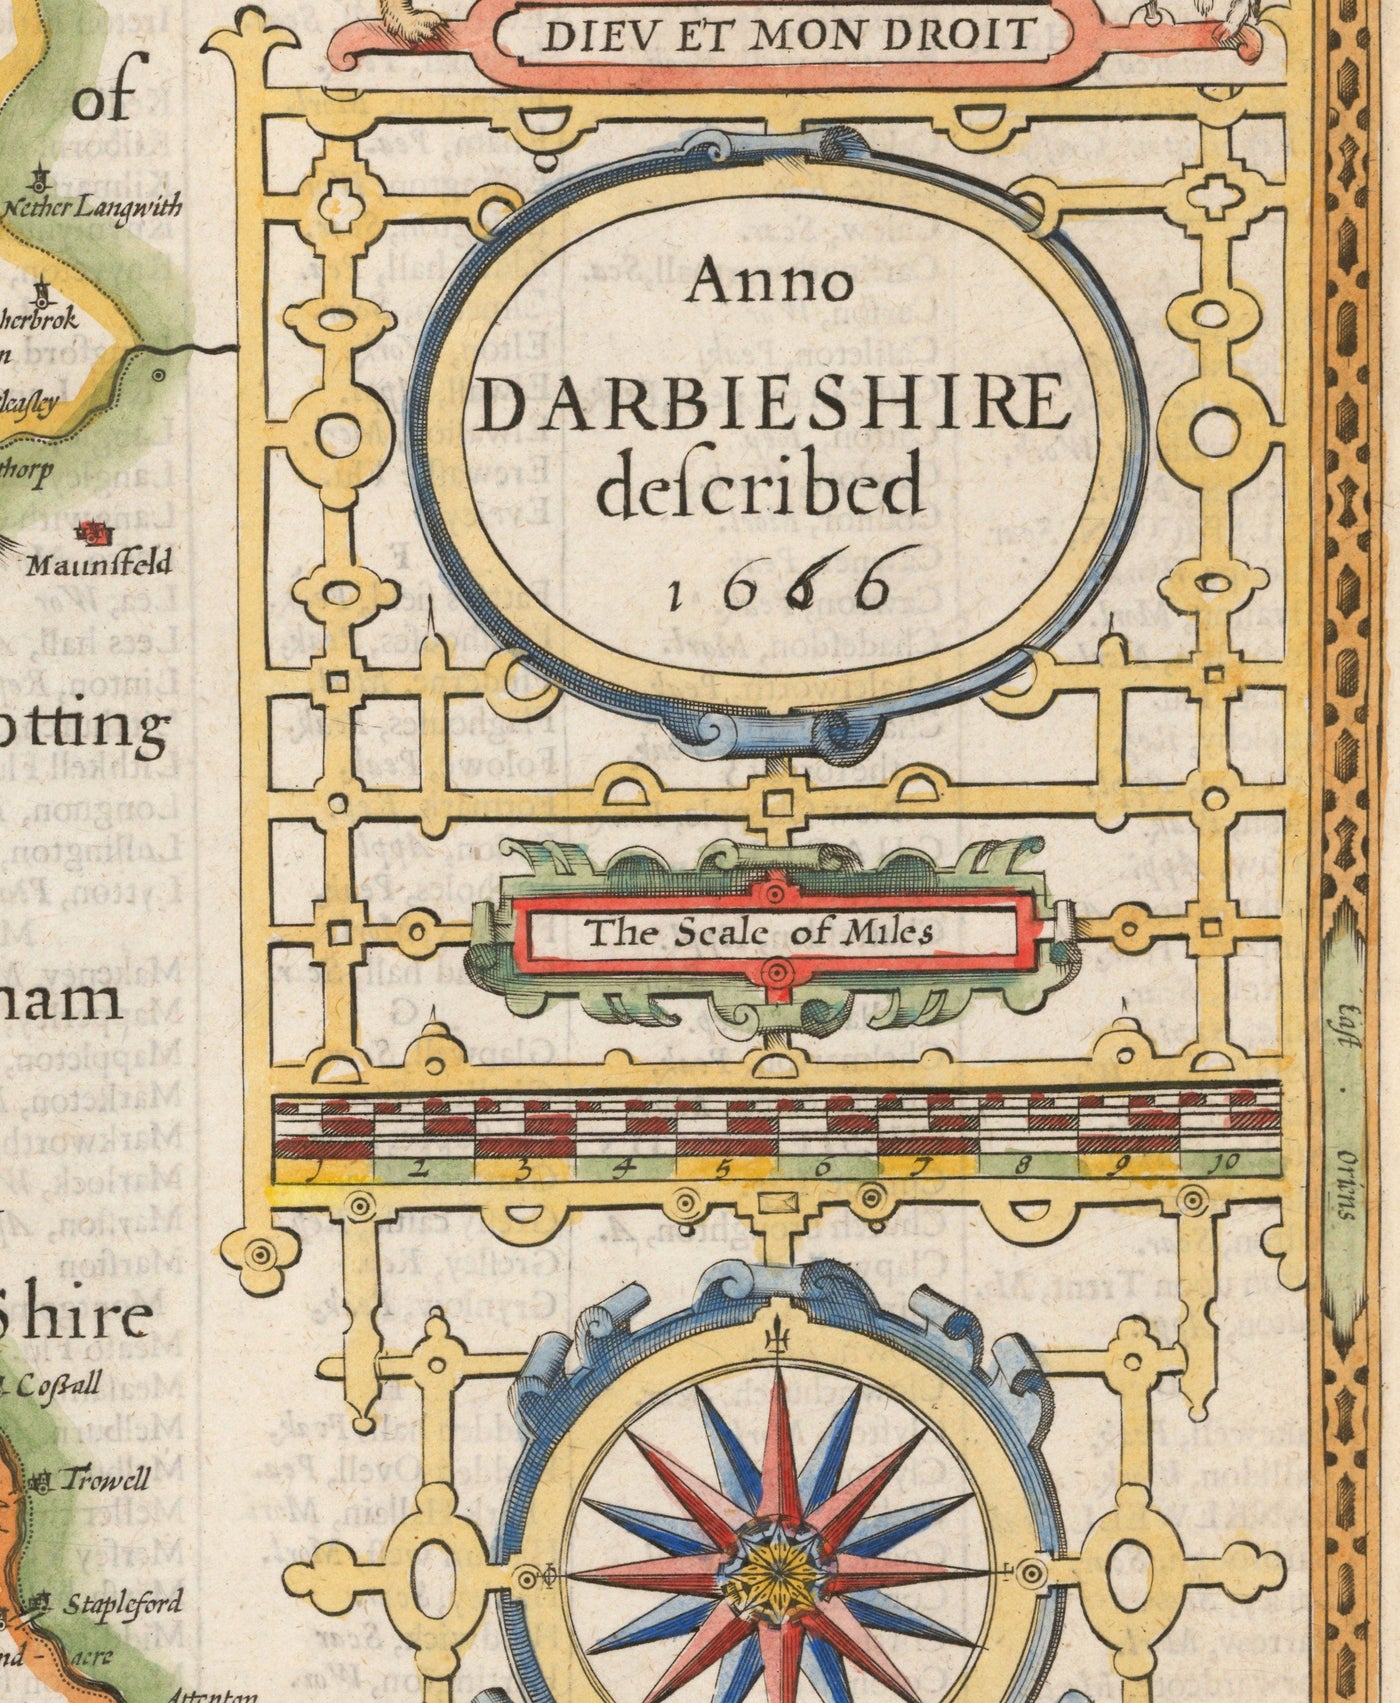 Mapa antiguo de Derbyshire, 1611 de John Speed ​​- Derby, Chesterfield, Buxton, Peak District